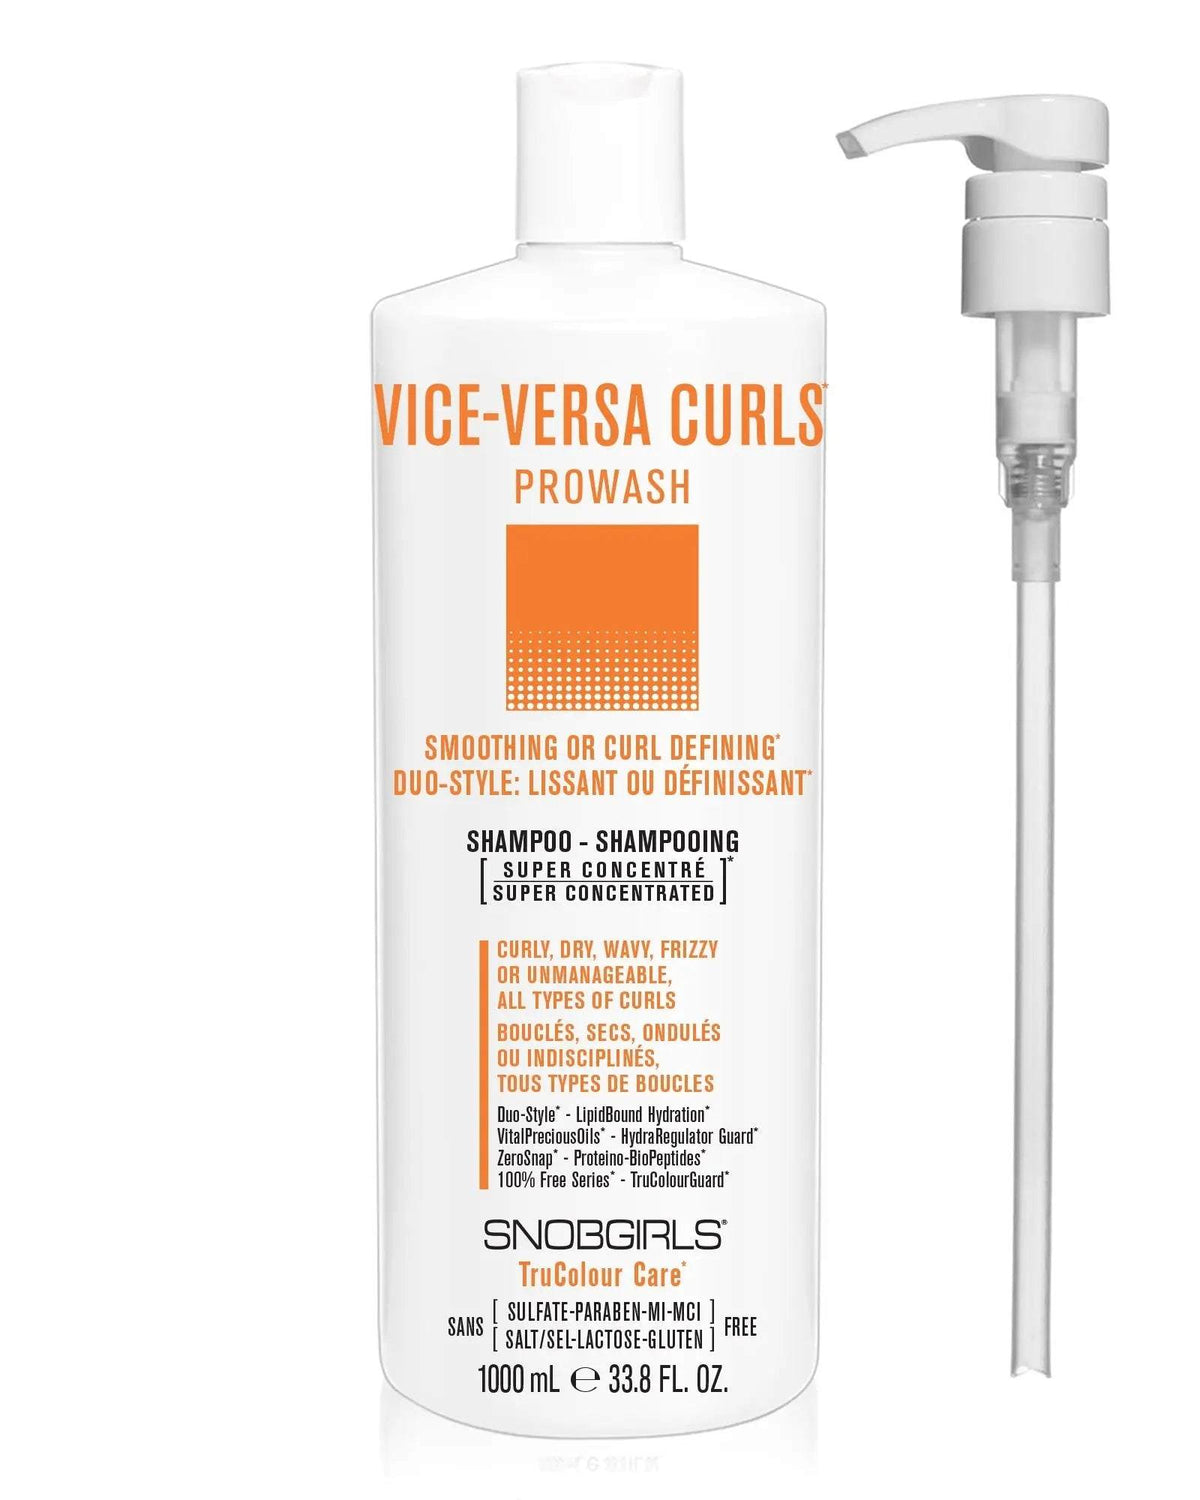 VICE-VERSA CURLS Prowash (shampoo) 1000 mL + Pump - SNOBGIRLS Canada